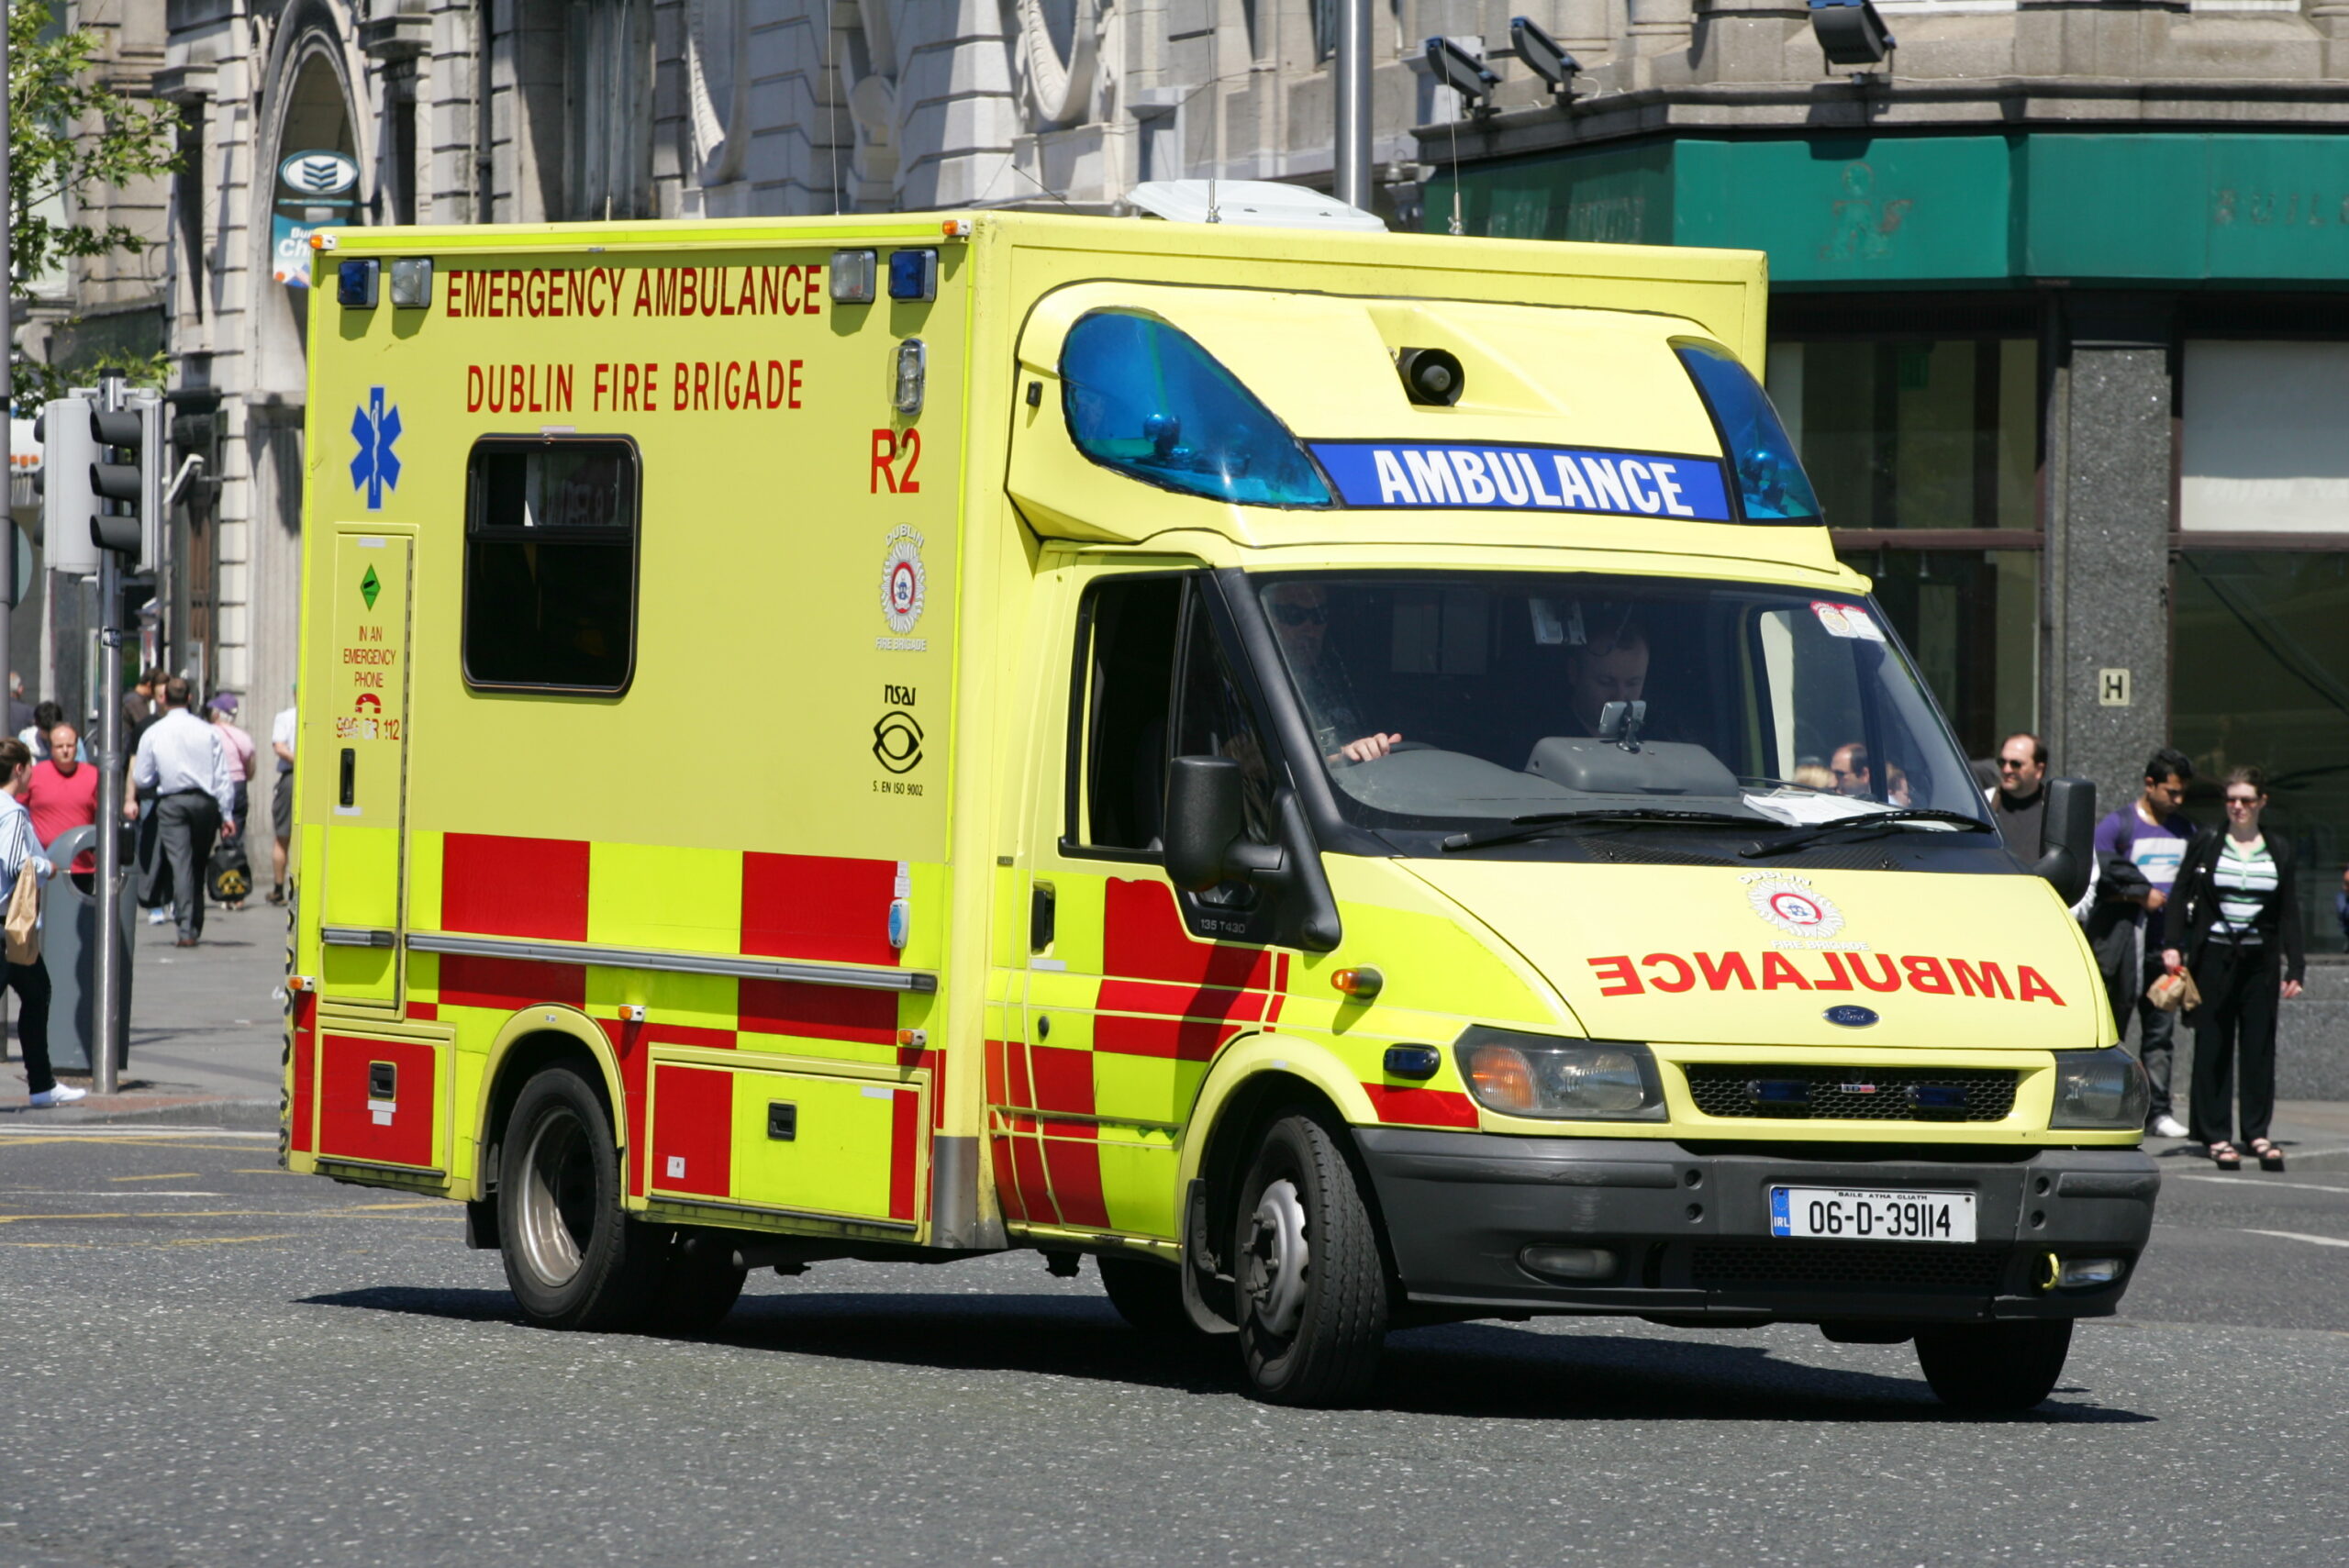 Dublin_Fire_Brigade_Emergency_Ambulance_R2_06D39114_Ford_Transit_-_Flickr_-_D464-Darren_Hall